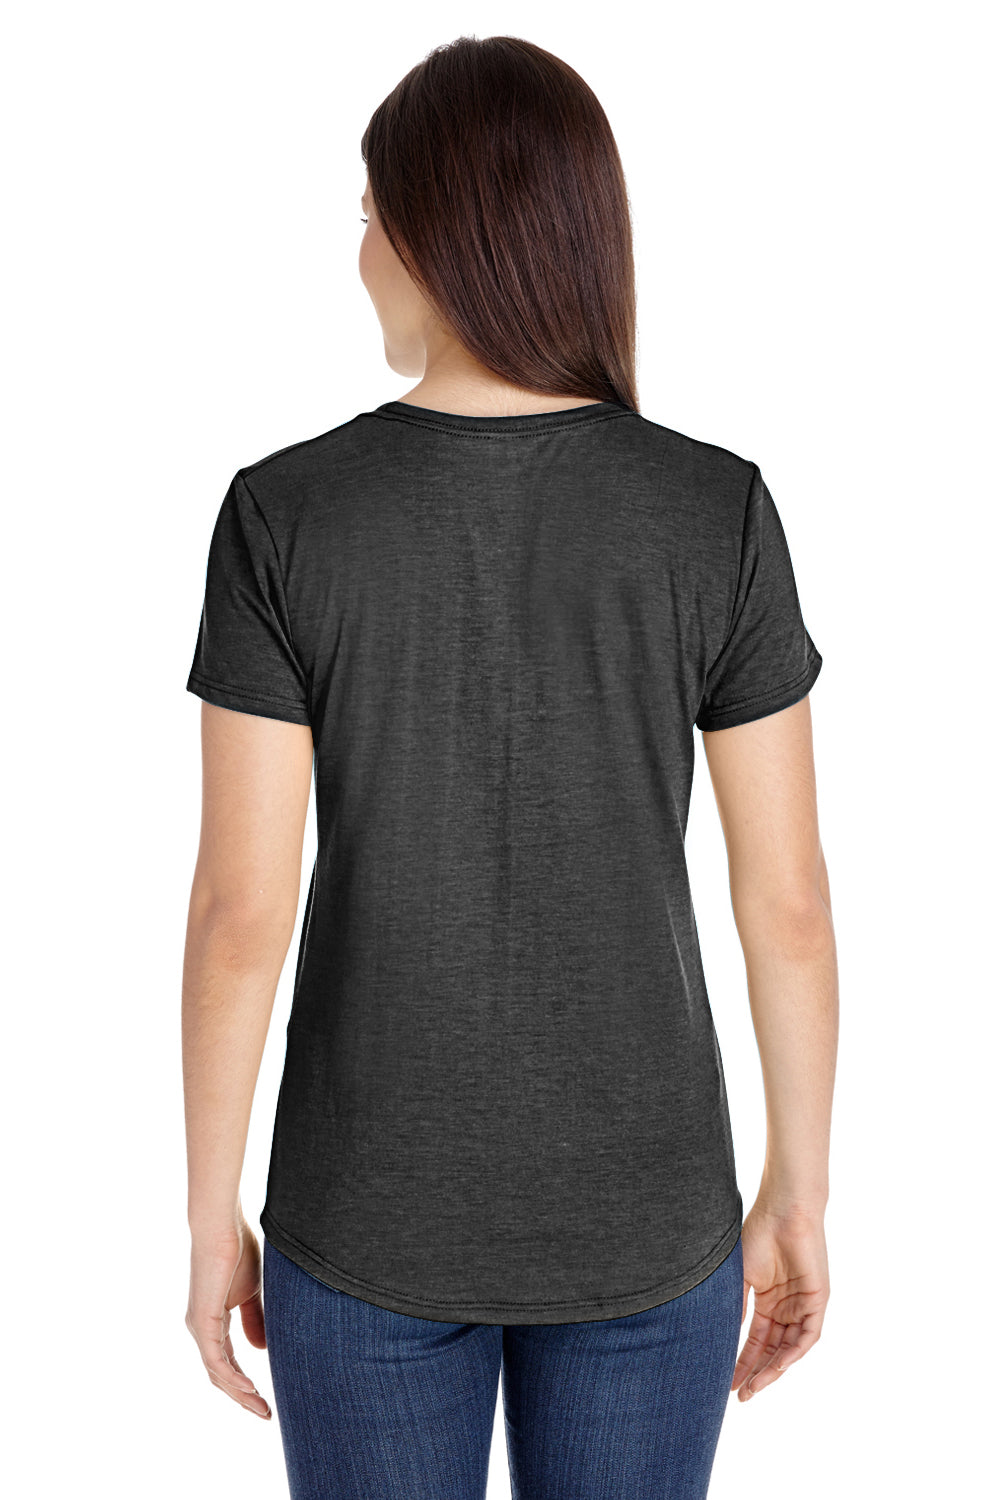 Anvil 6750L Womens Short Sleeve Crewneck T-Shirt Heather Dark Grey Back